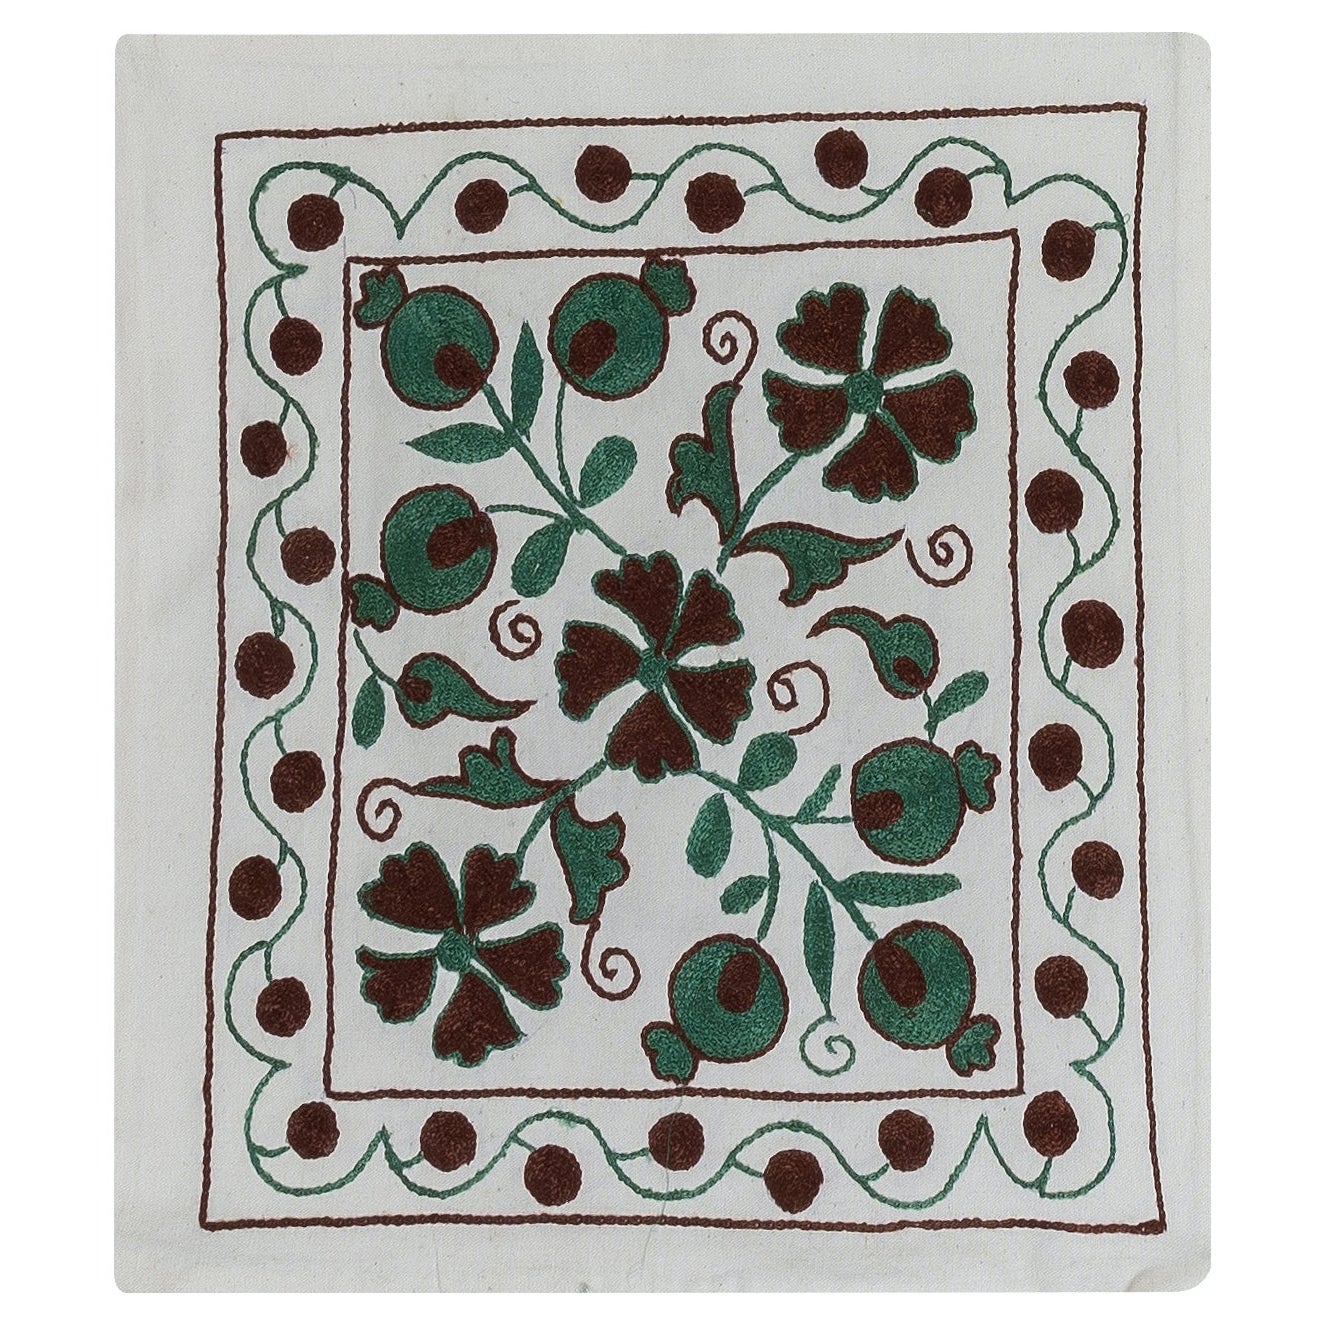 Uzbek Silk Embroidery Lace Pillow Cover, Handmade Suzani Textile Pillow